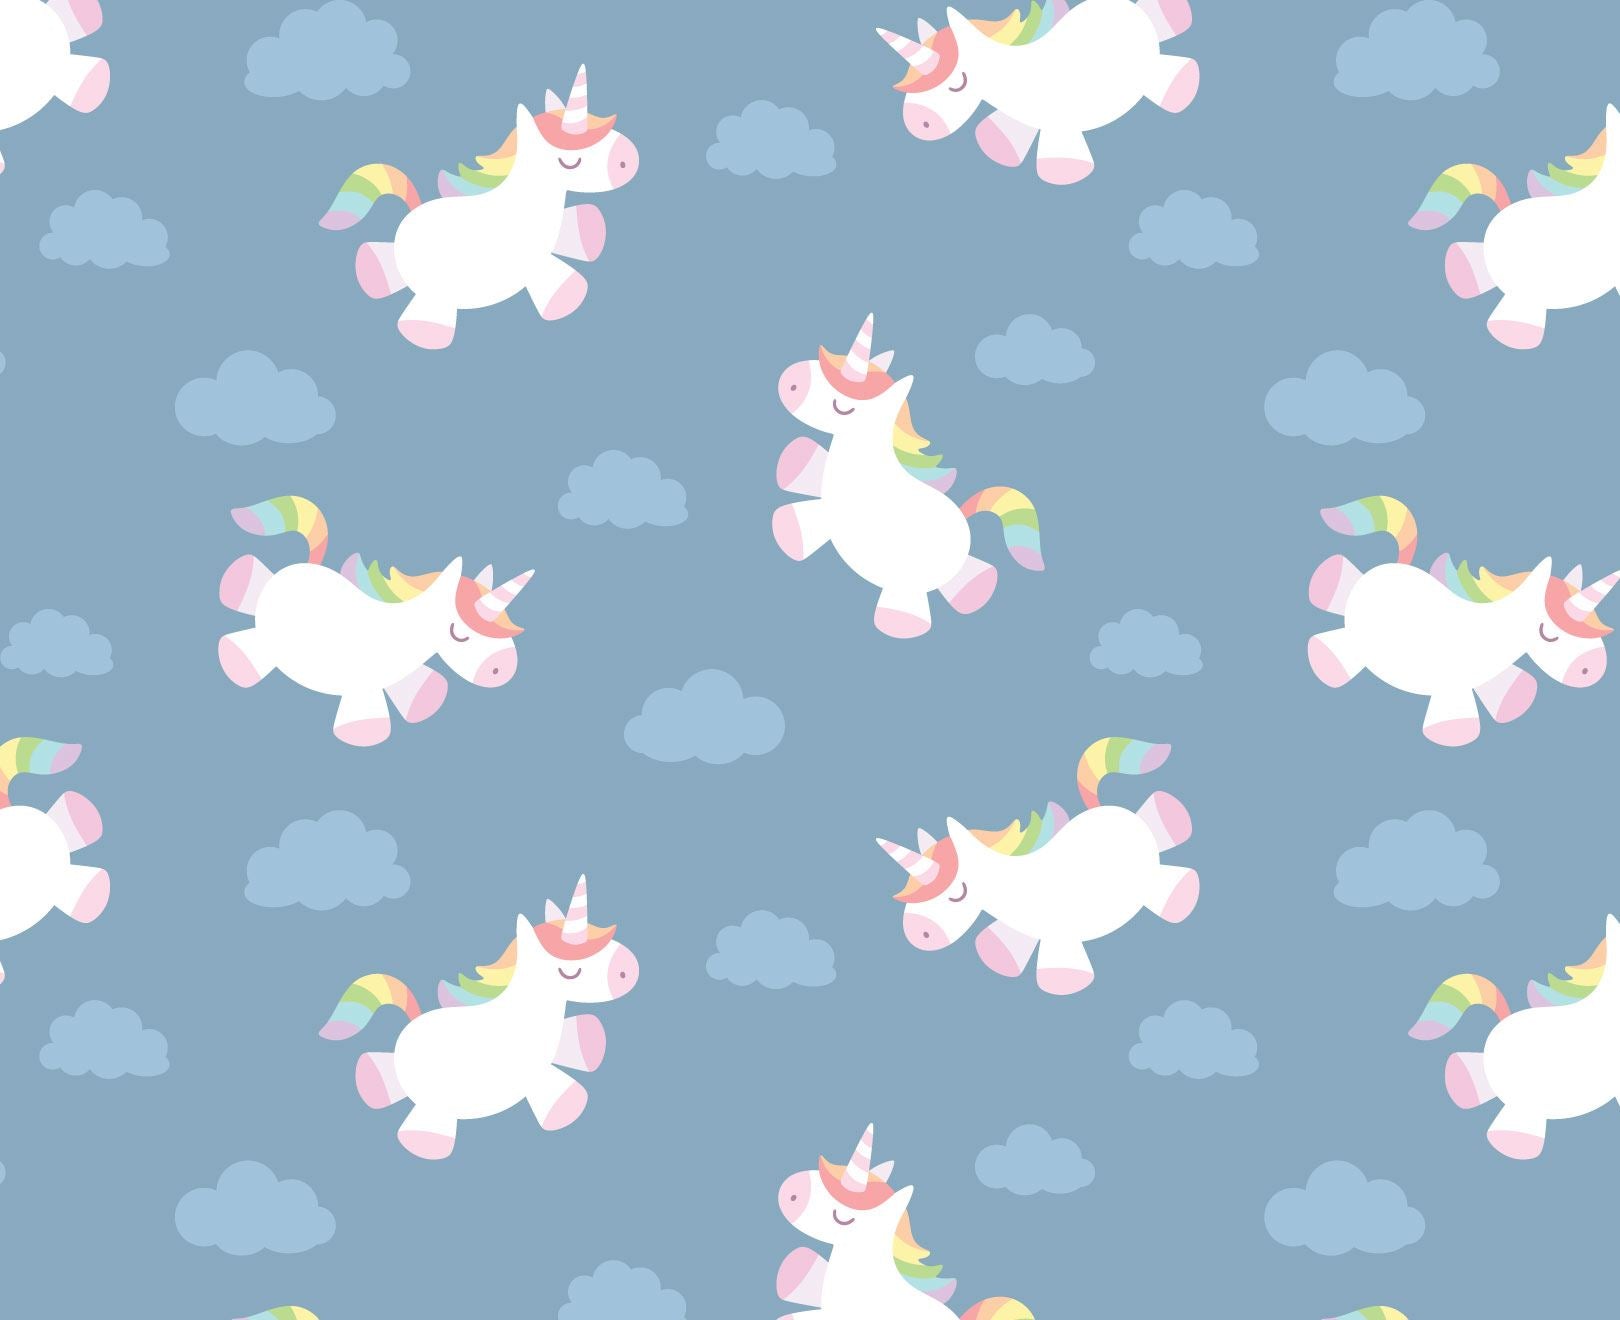 A pattern of cartoon unicorns and clouds on a blue background - Unicorn